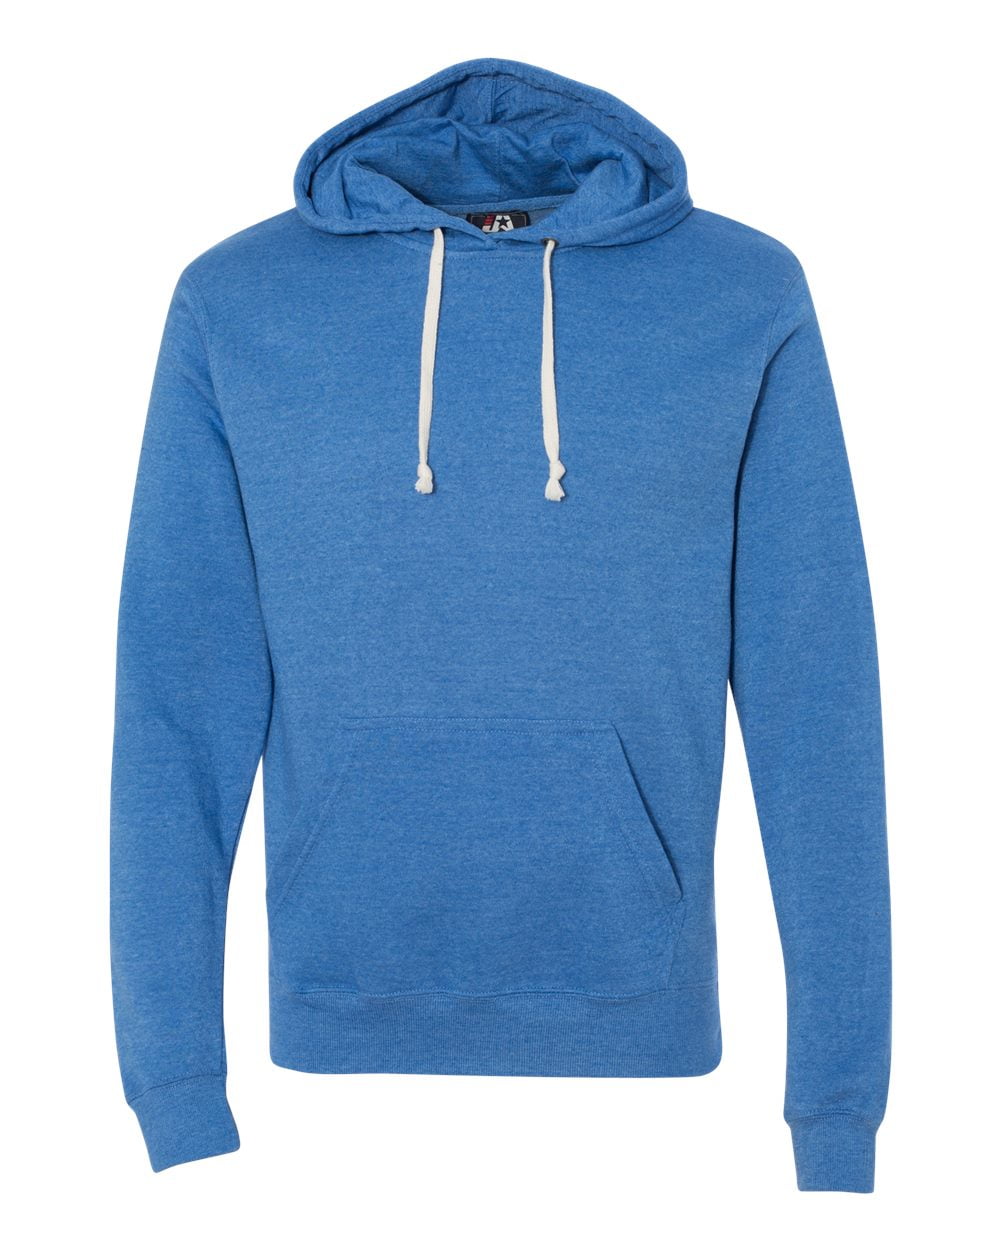 J. America - Triblend Hooded Sweatshirt - Walmart.com